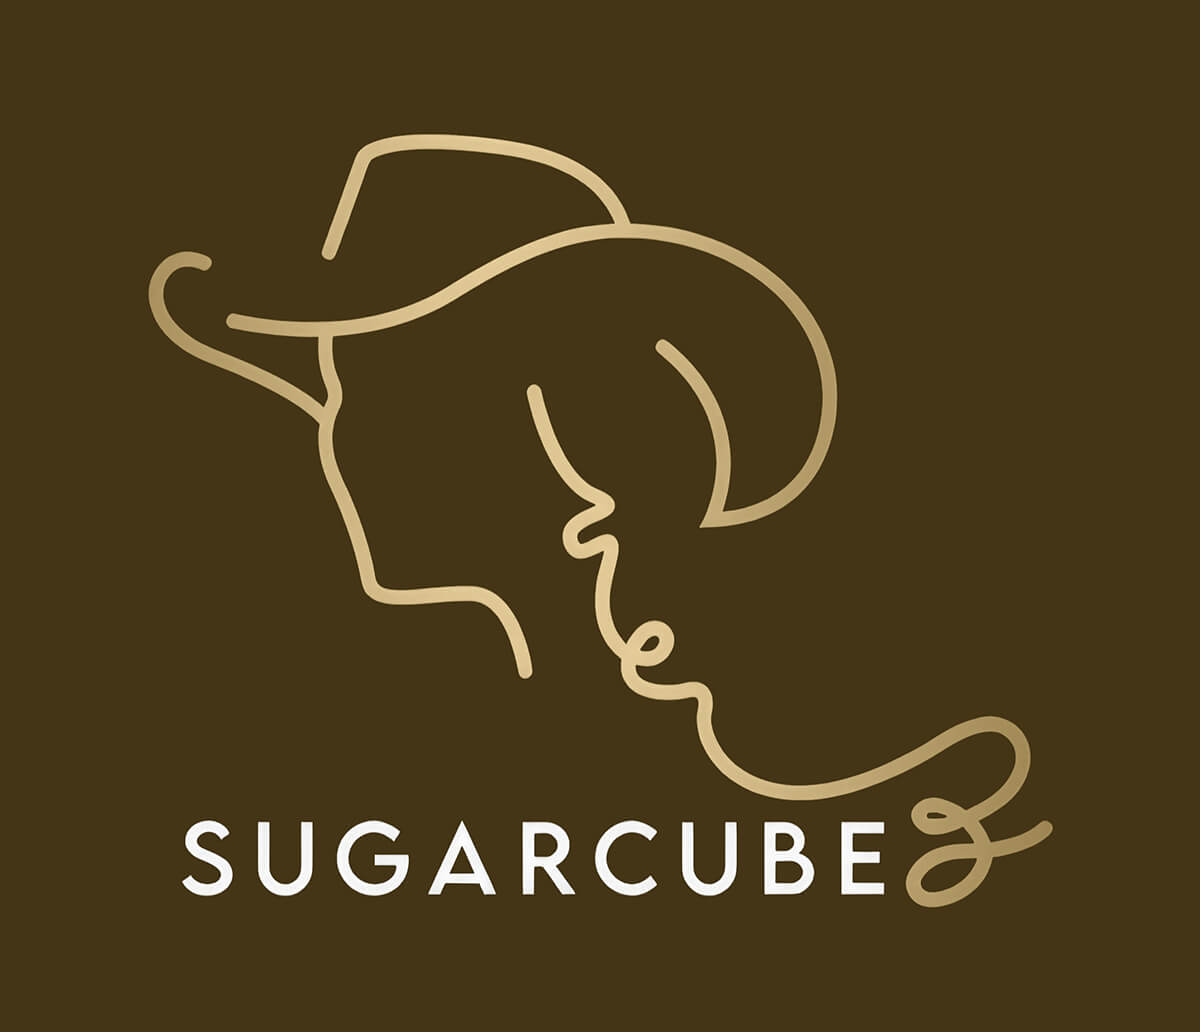 Sugarcubez logo